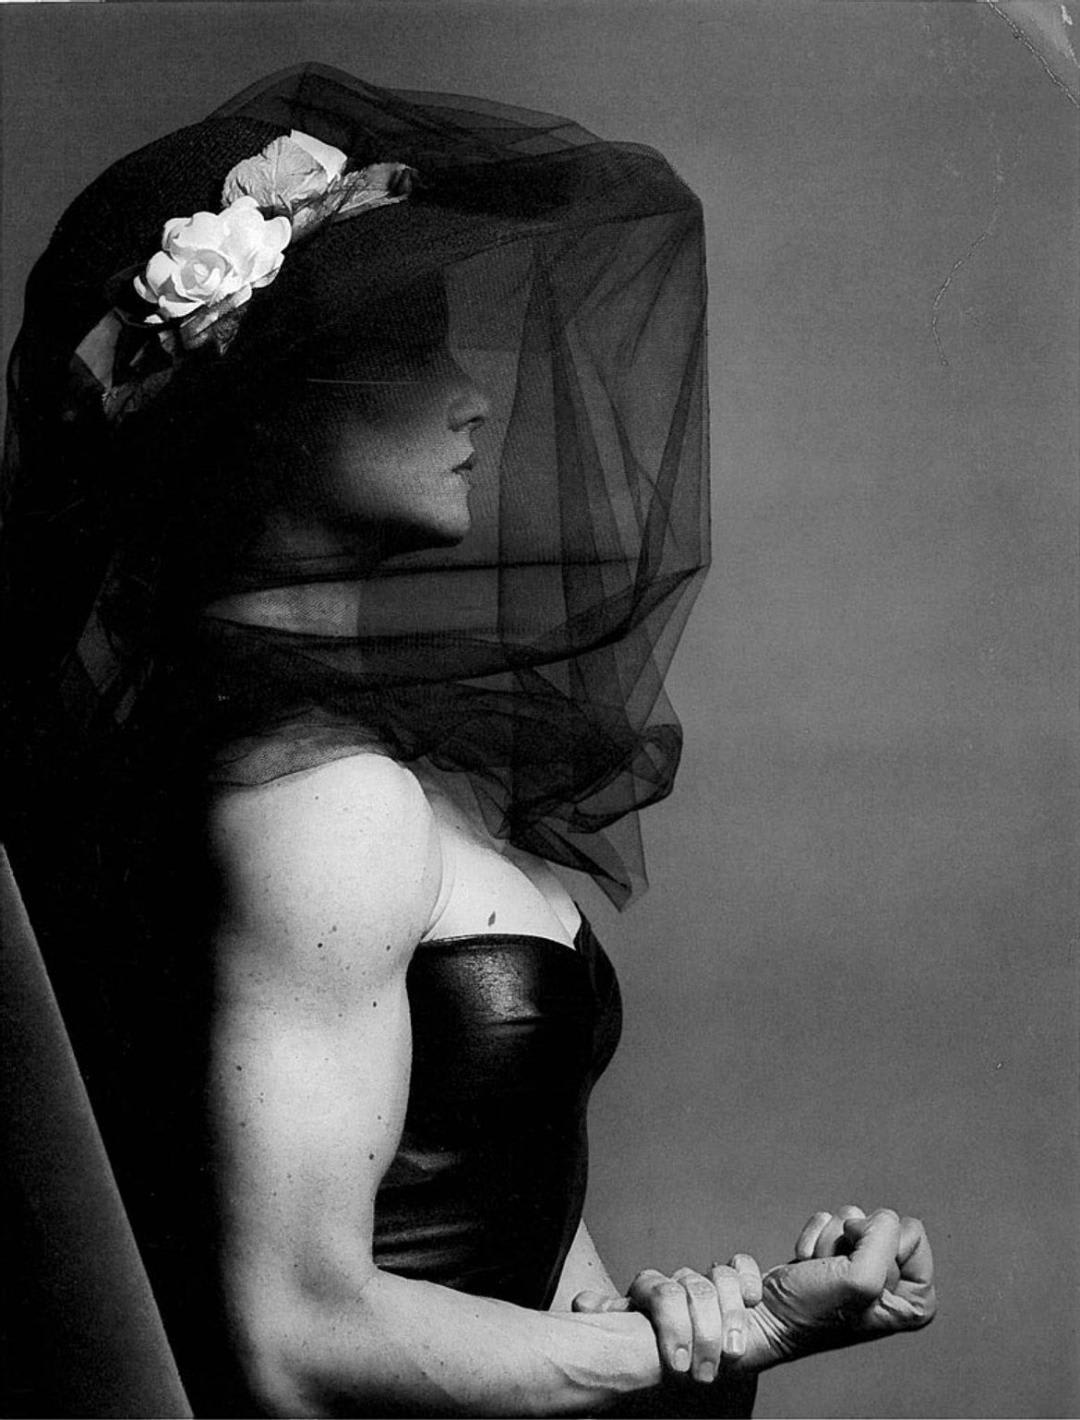 Lisa Lyon, body builder, 1983, photo by Robert Mapplethorpe